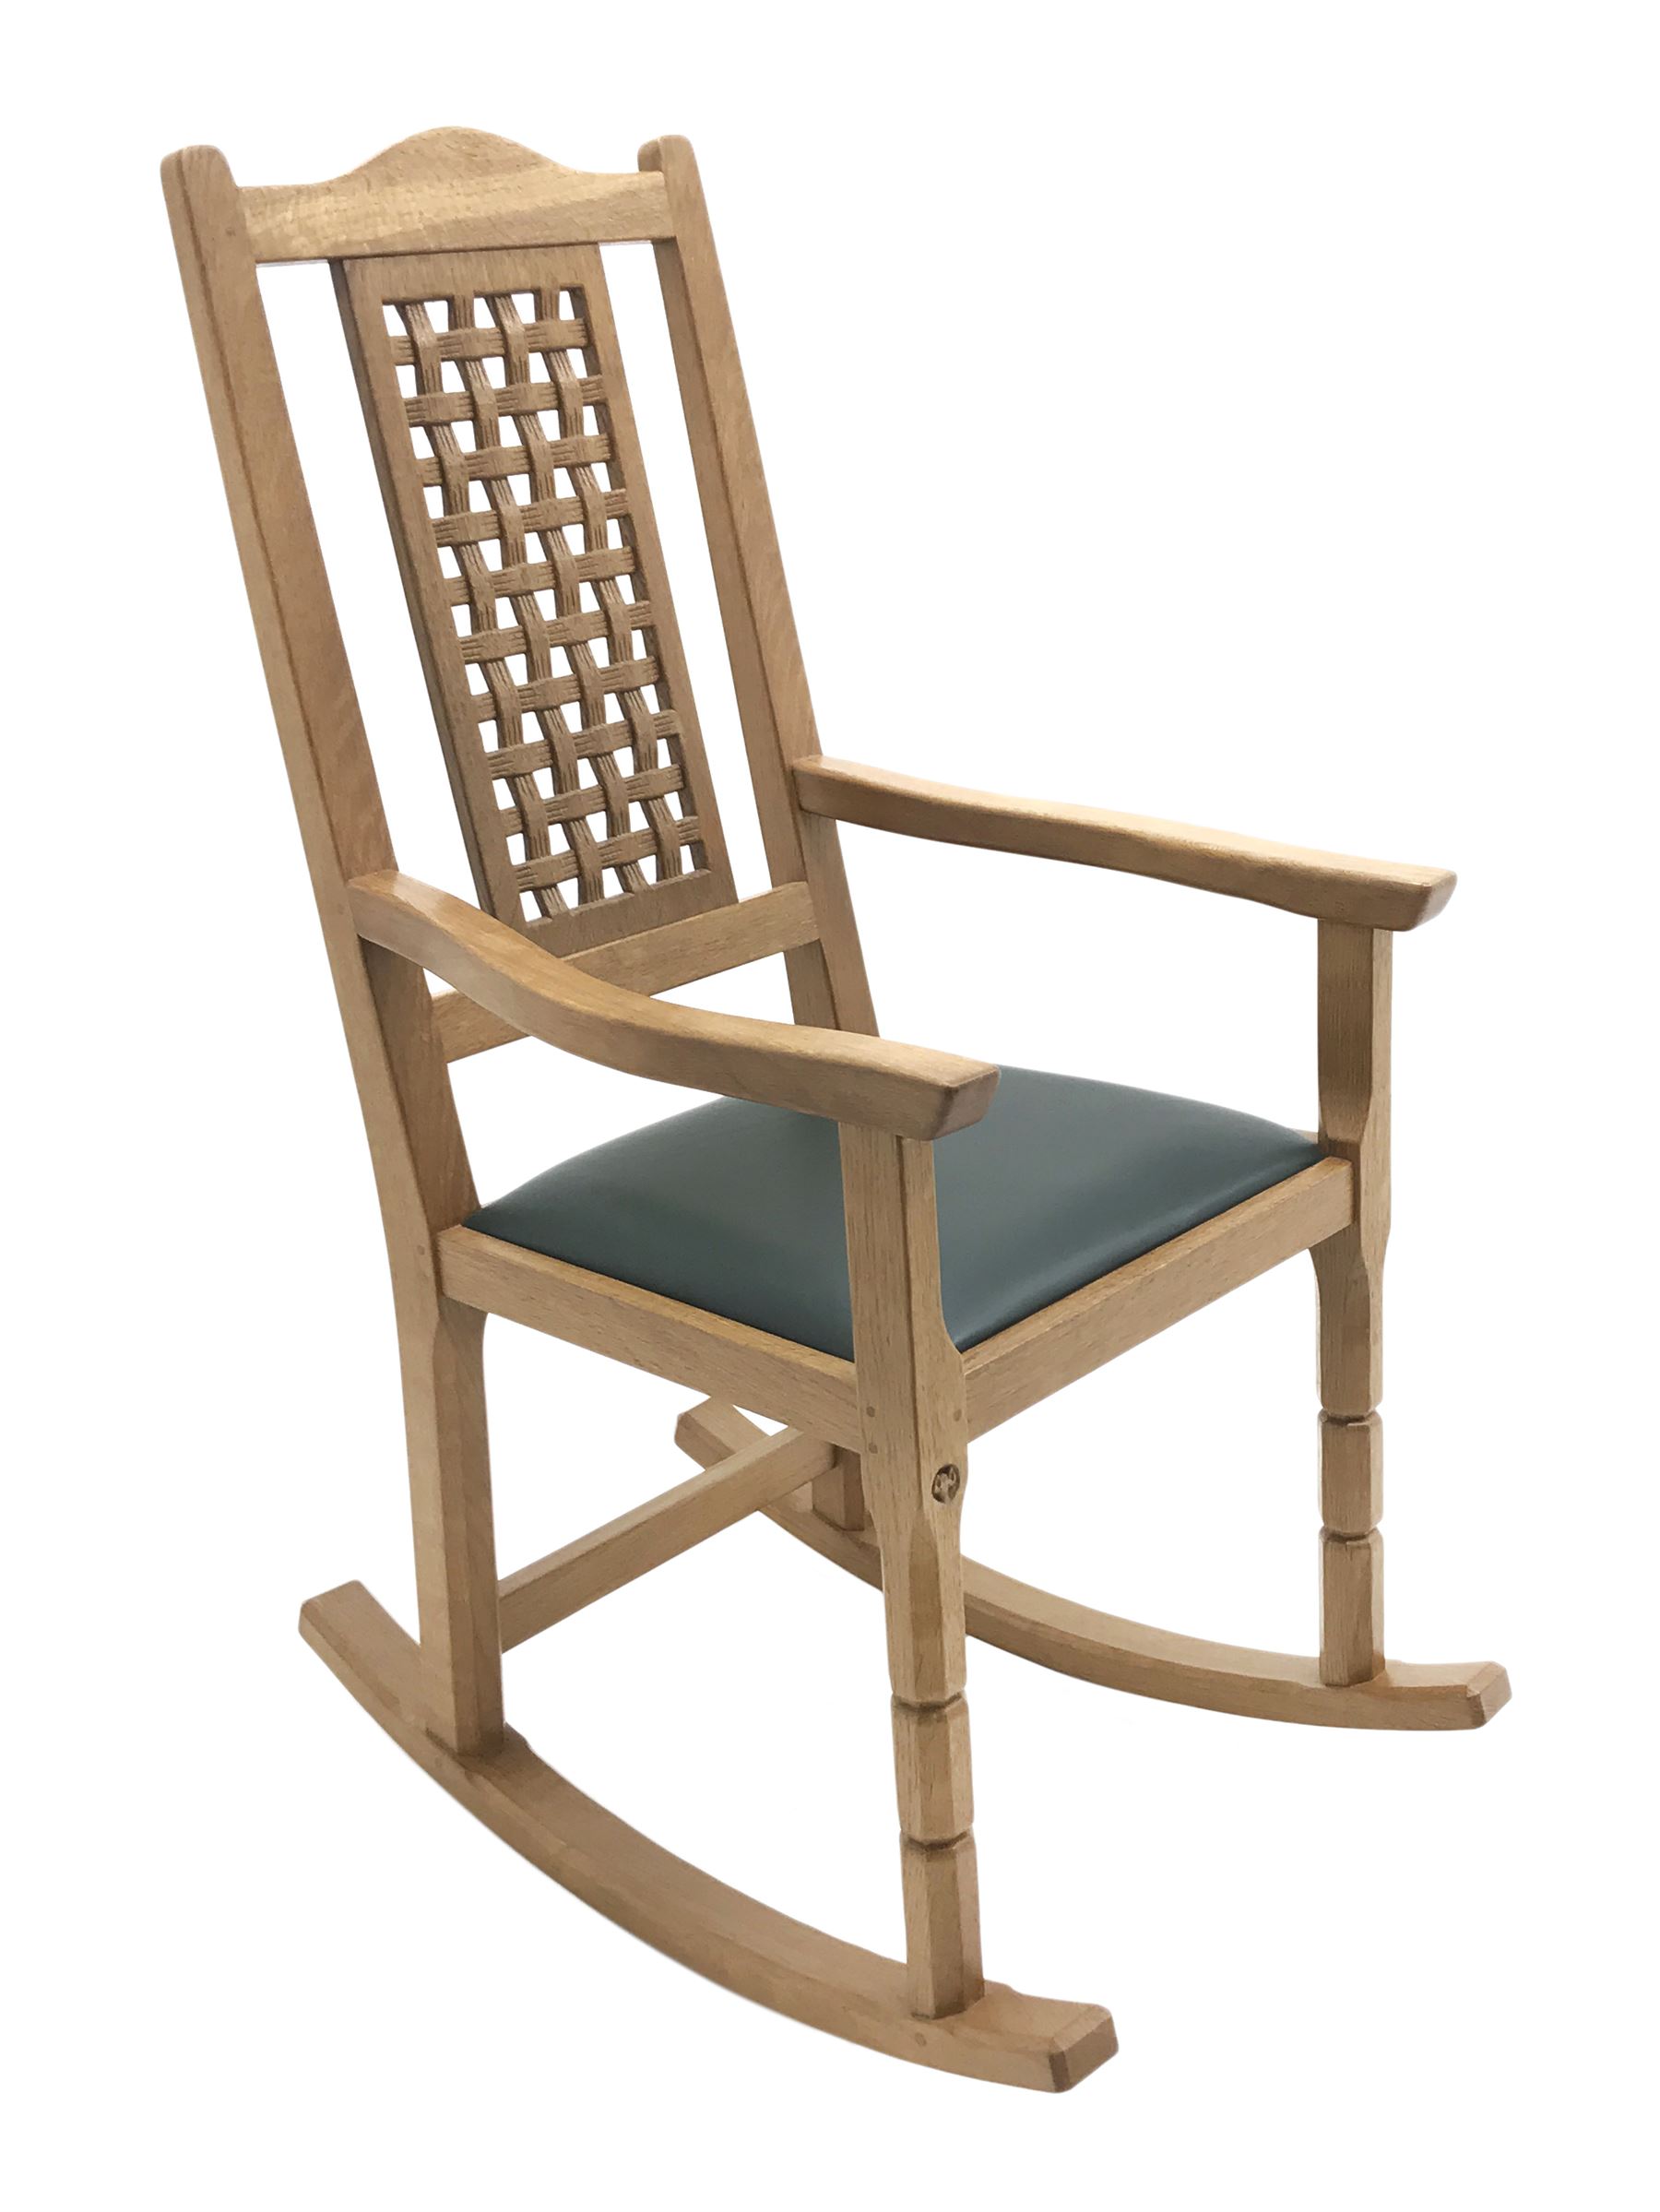 'Foxman' oak rocking chair